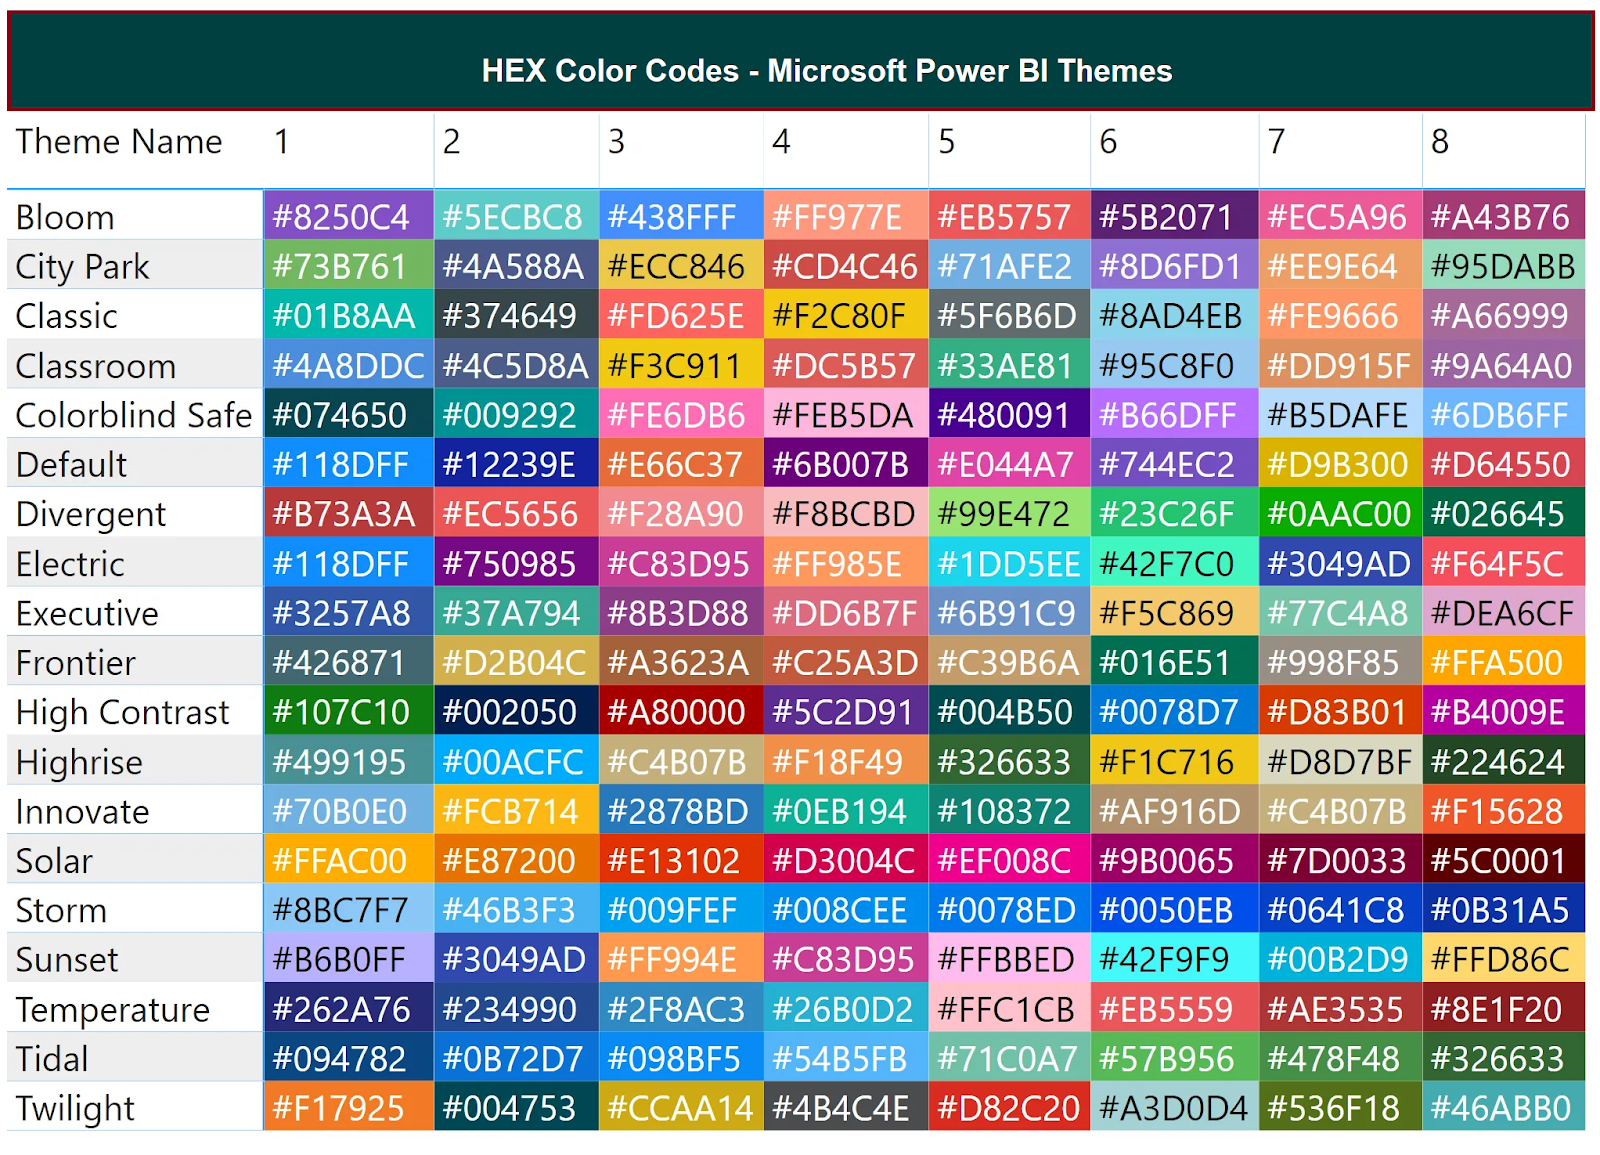 Microsoft Power BI Theme Colors with HEX Codes | Power BI Blog – Quant ...